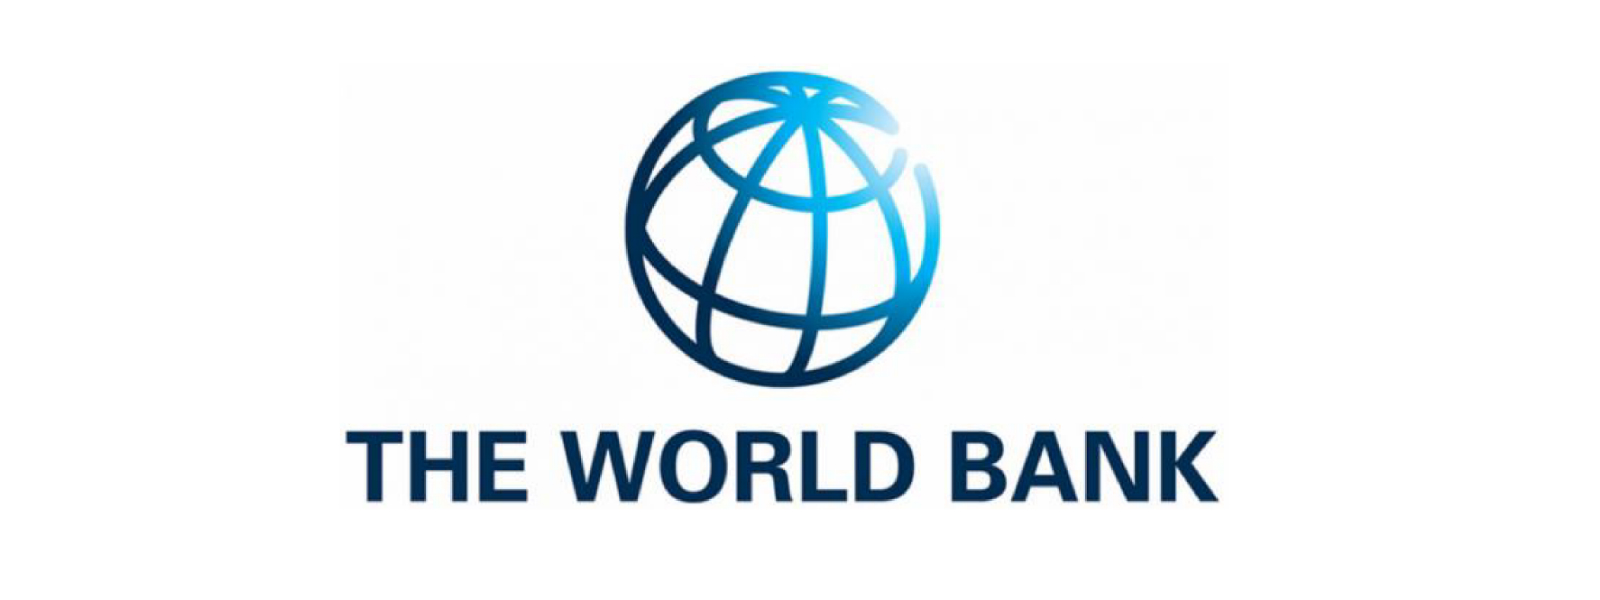 Sri Lanka’s growth forecast reduced to 3.5%: World Bank